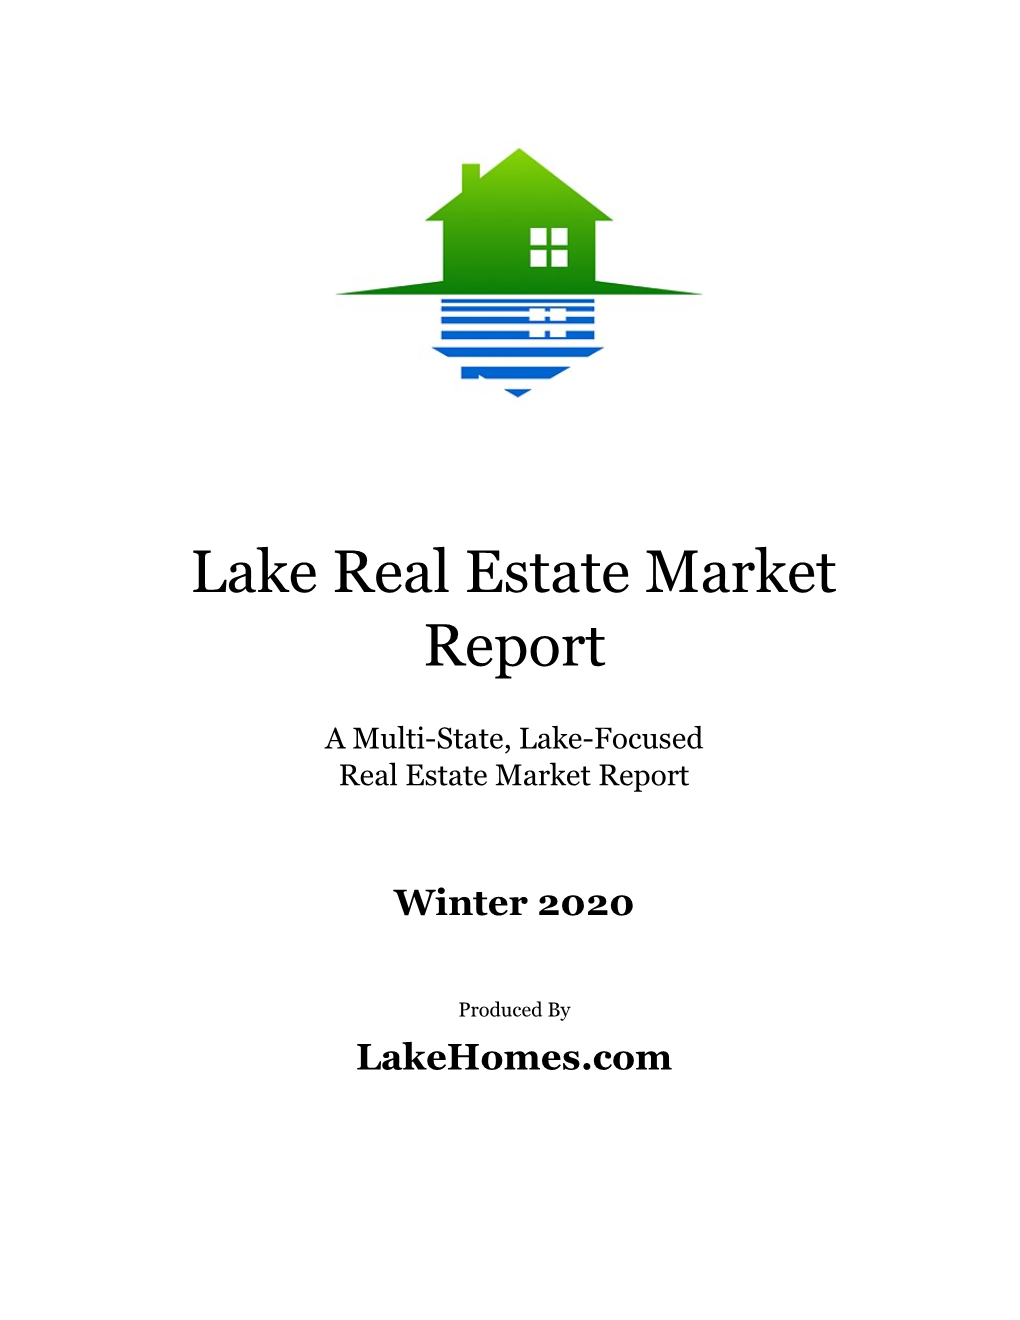 Lake Real Estate Market Report